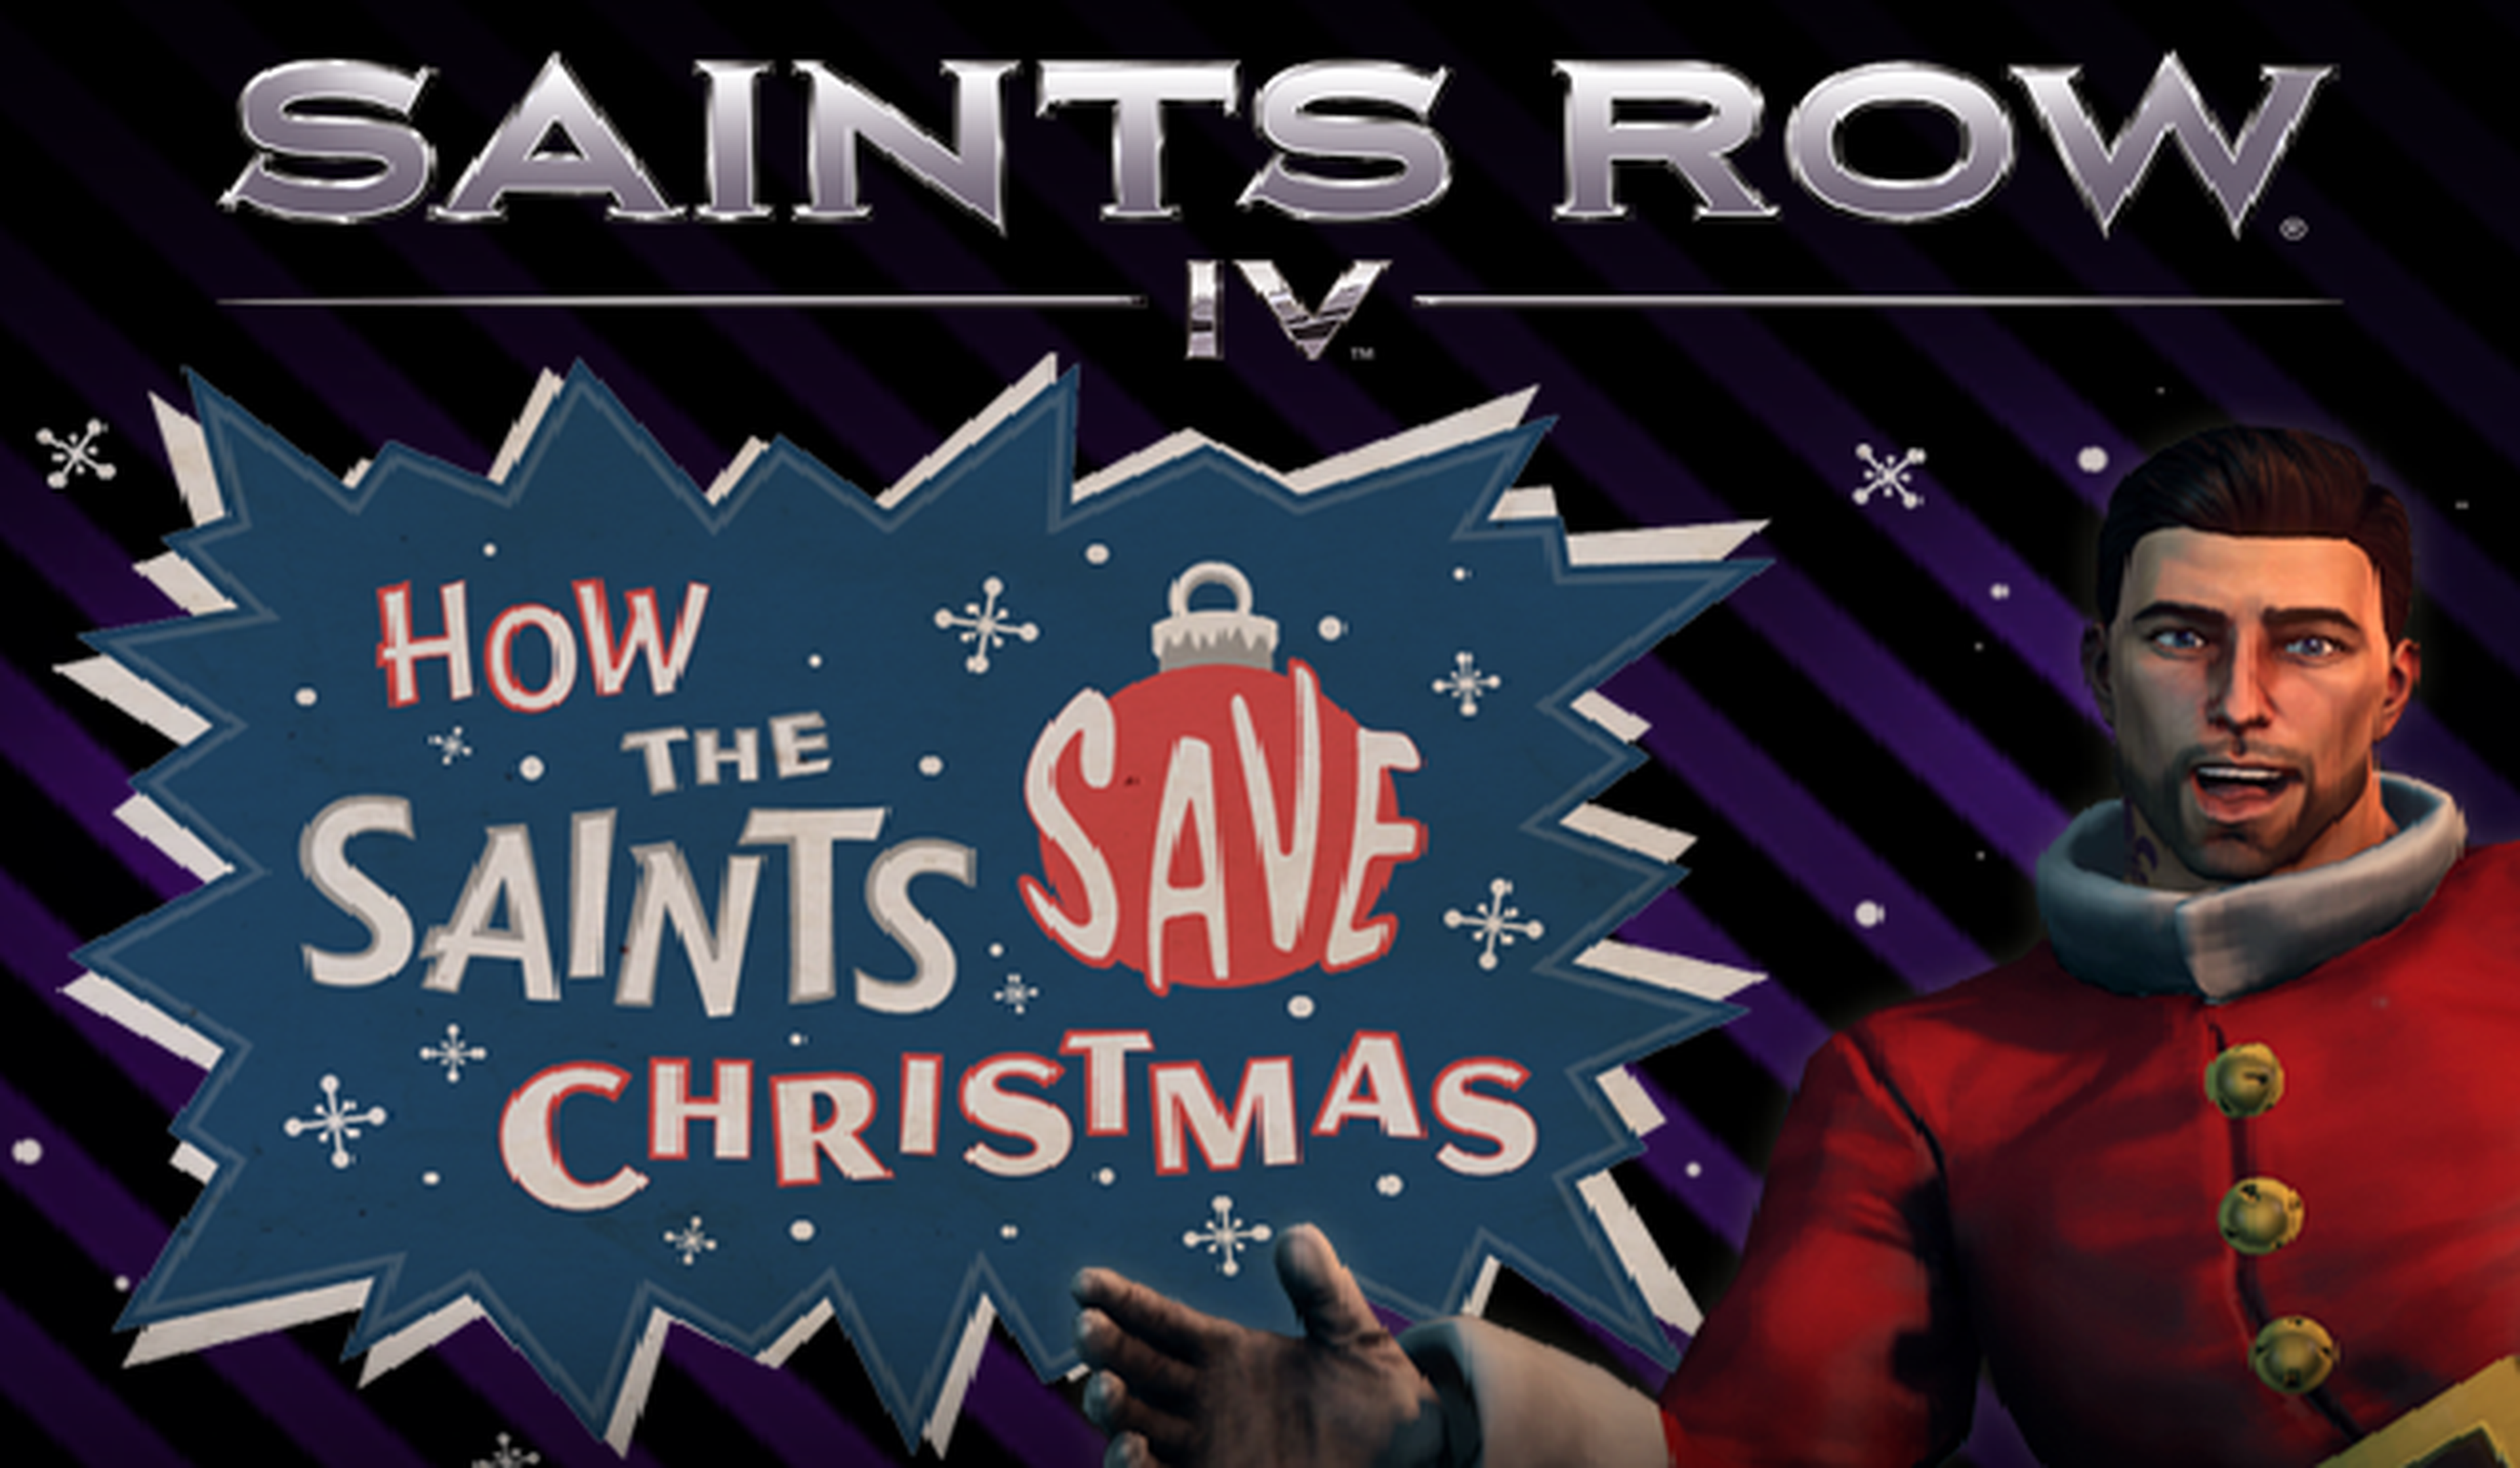 DLC de Saints Row IV para navidad